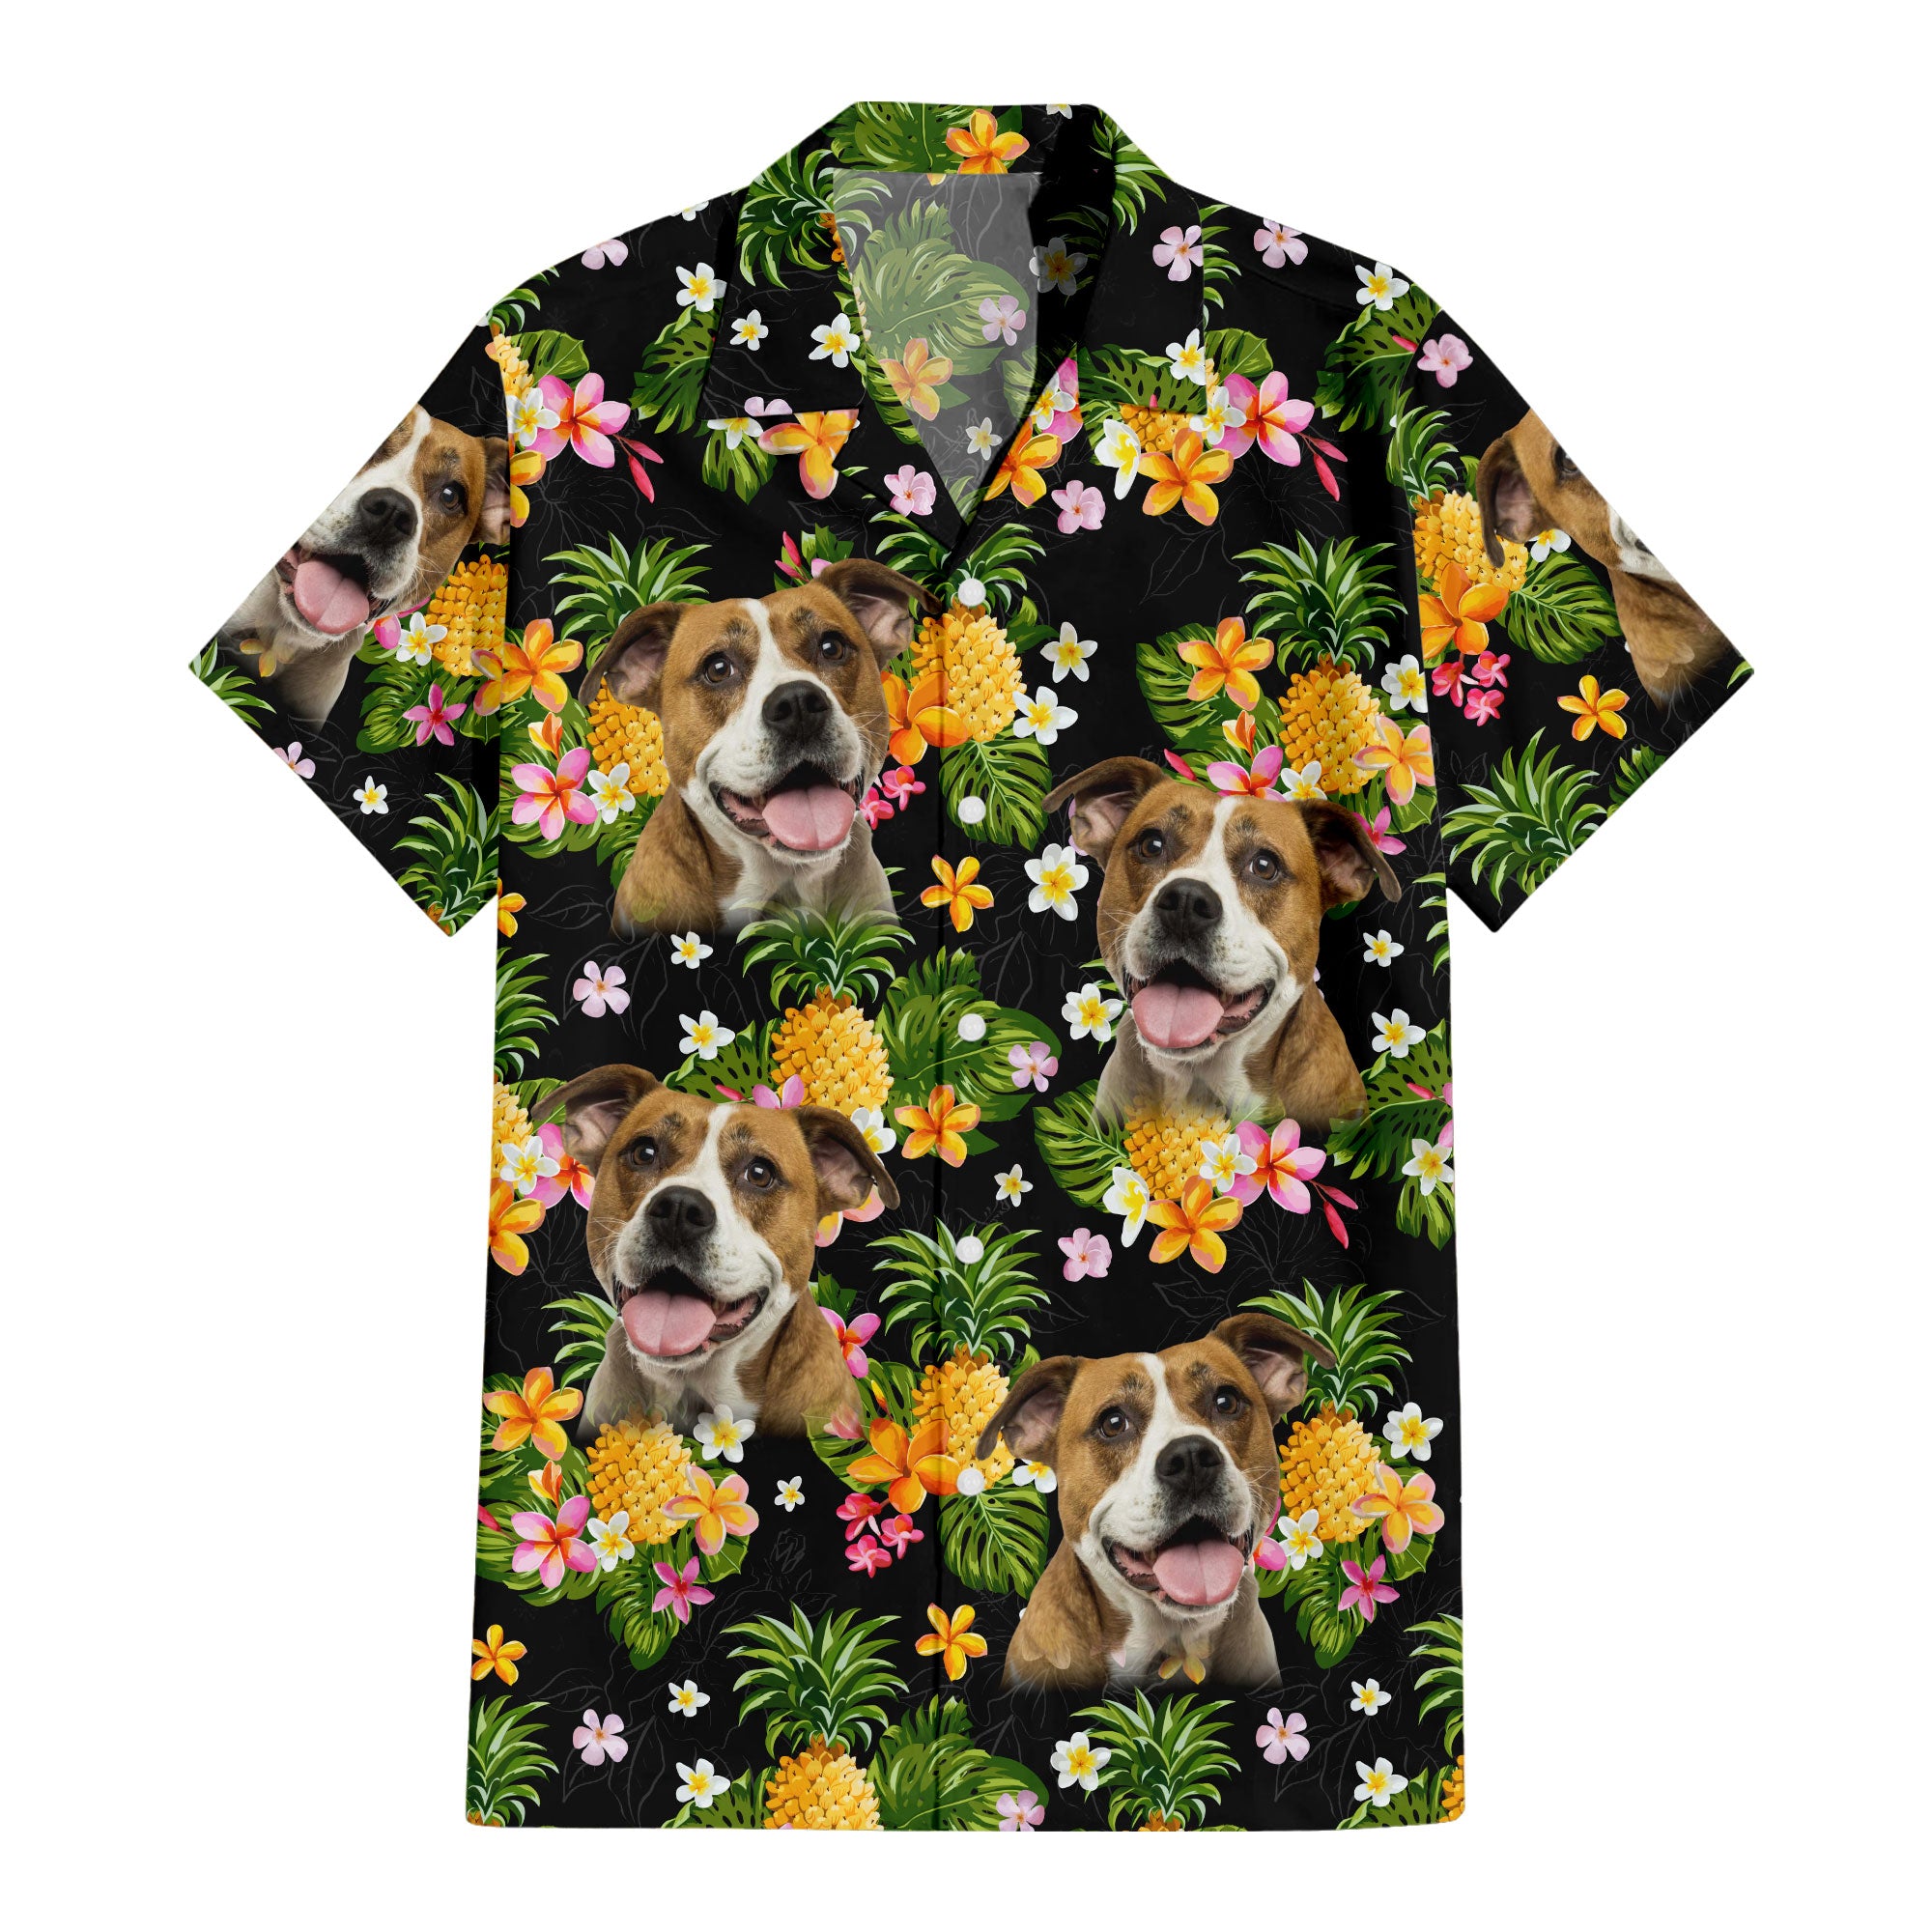 Hawaiian Shirt & Shorts Personalized - 44